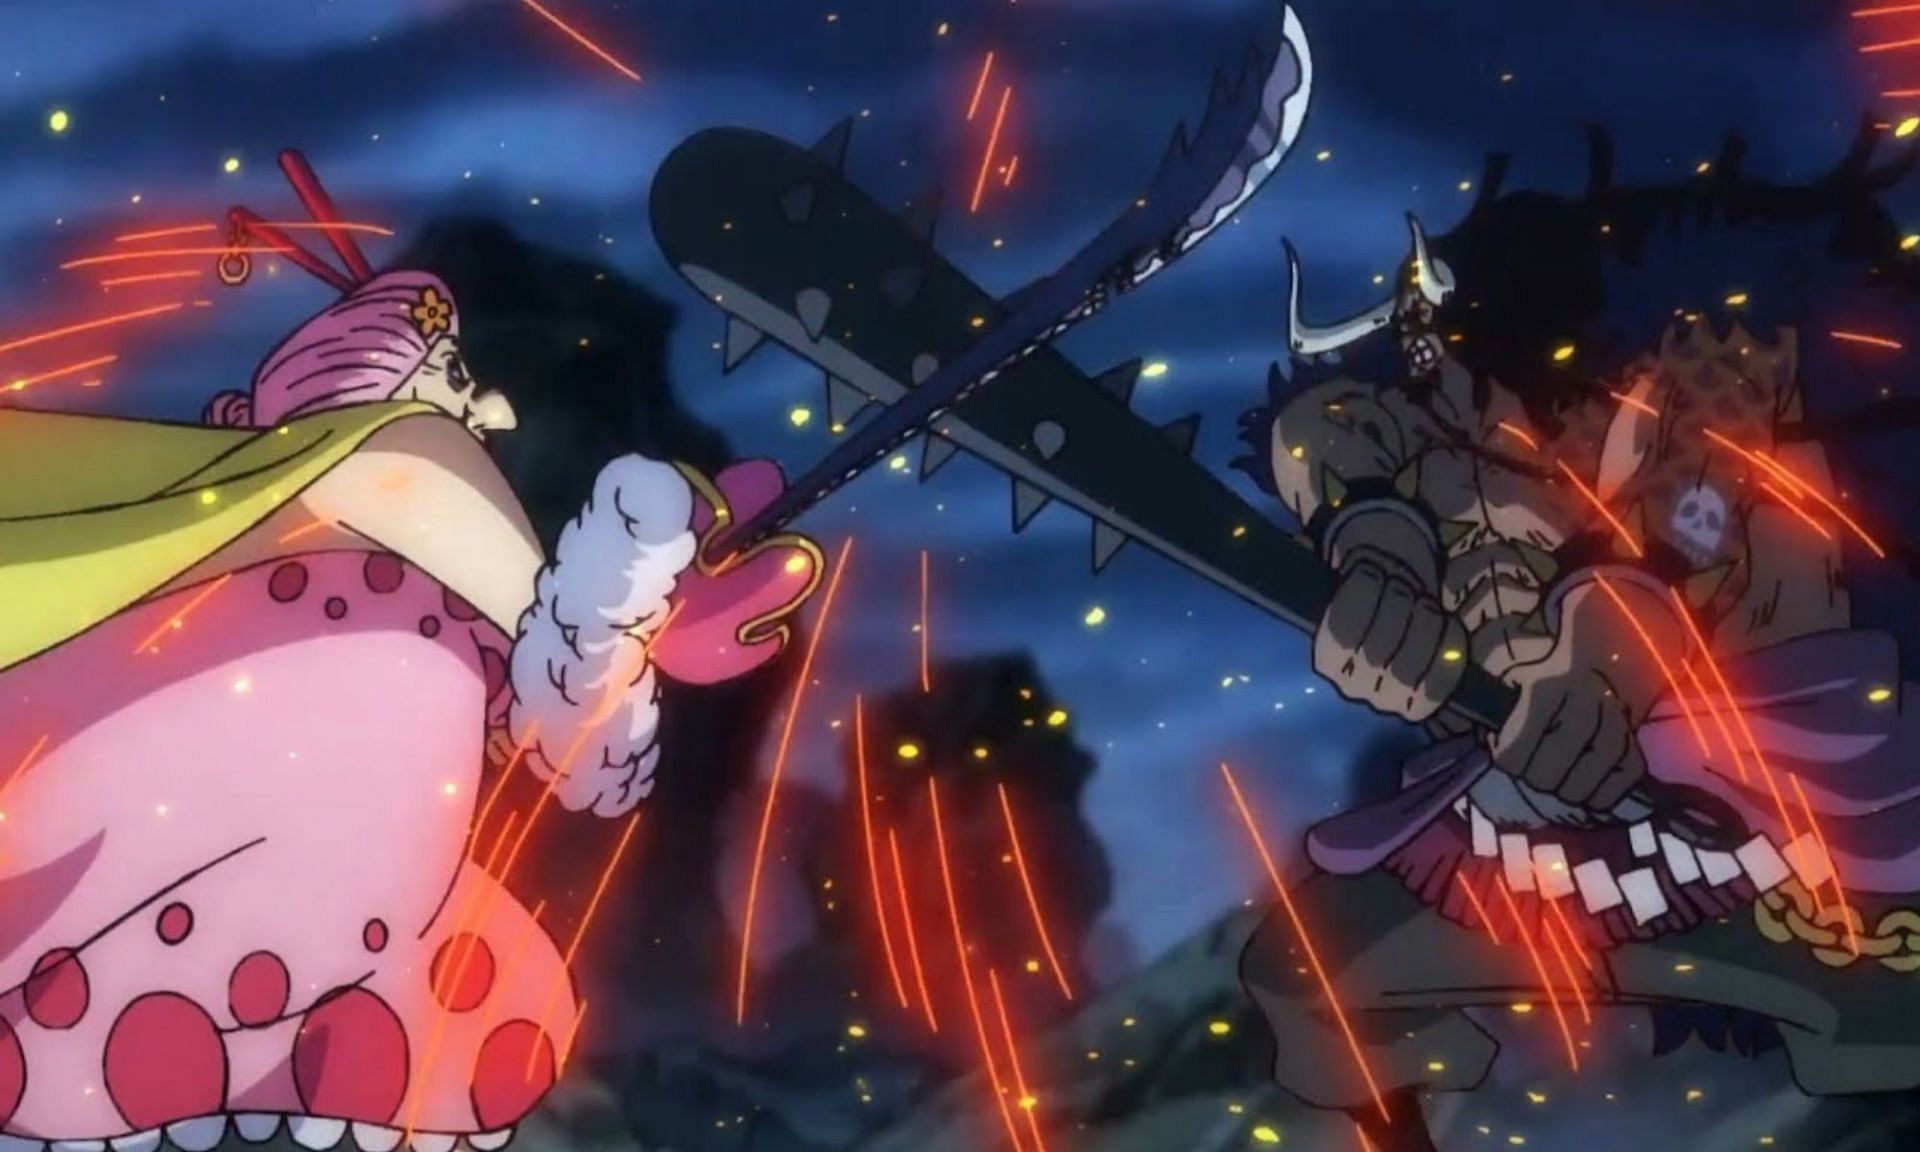 This is truly a clash between titans (Image Credits: Eiichiro Oda/Shueisha, Viz Media, One Piece)